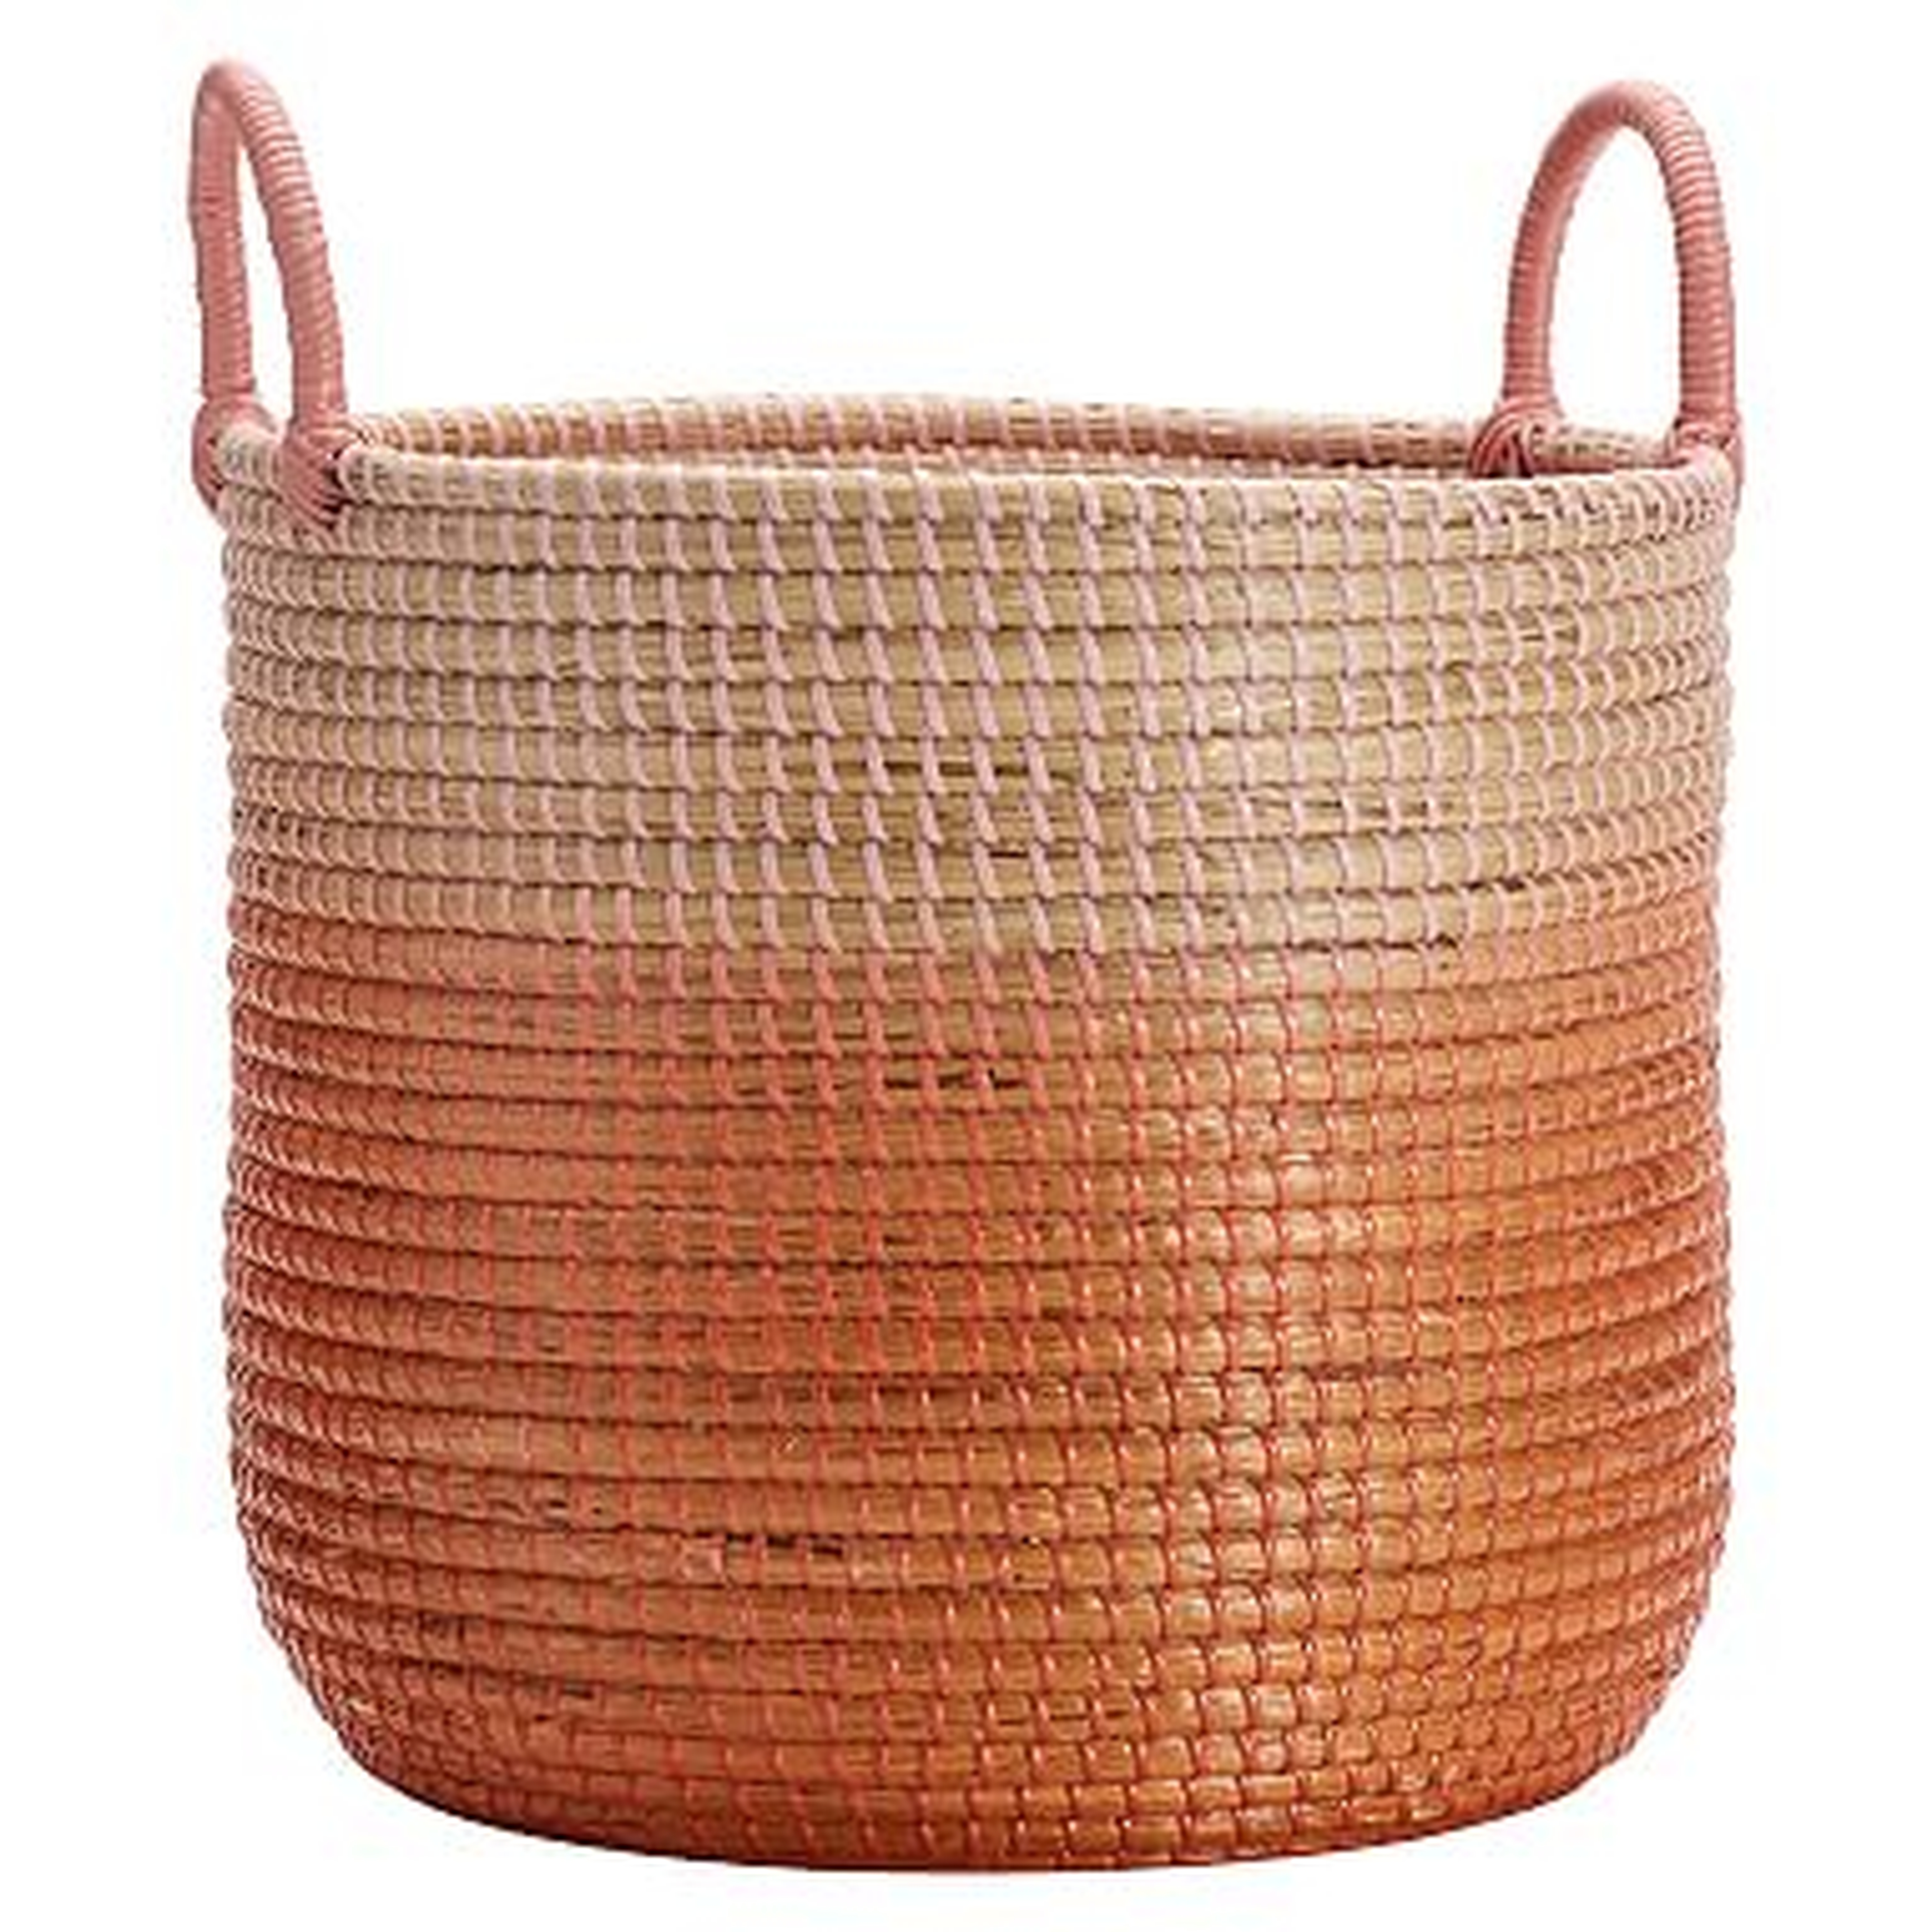 Woven Seagrass Storage Baskets, Medium, Single, Blush Ombre - Pottery Barn Teen